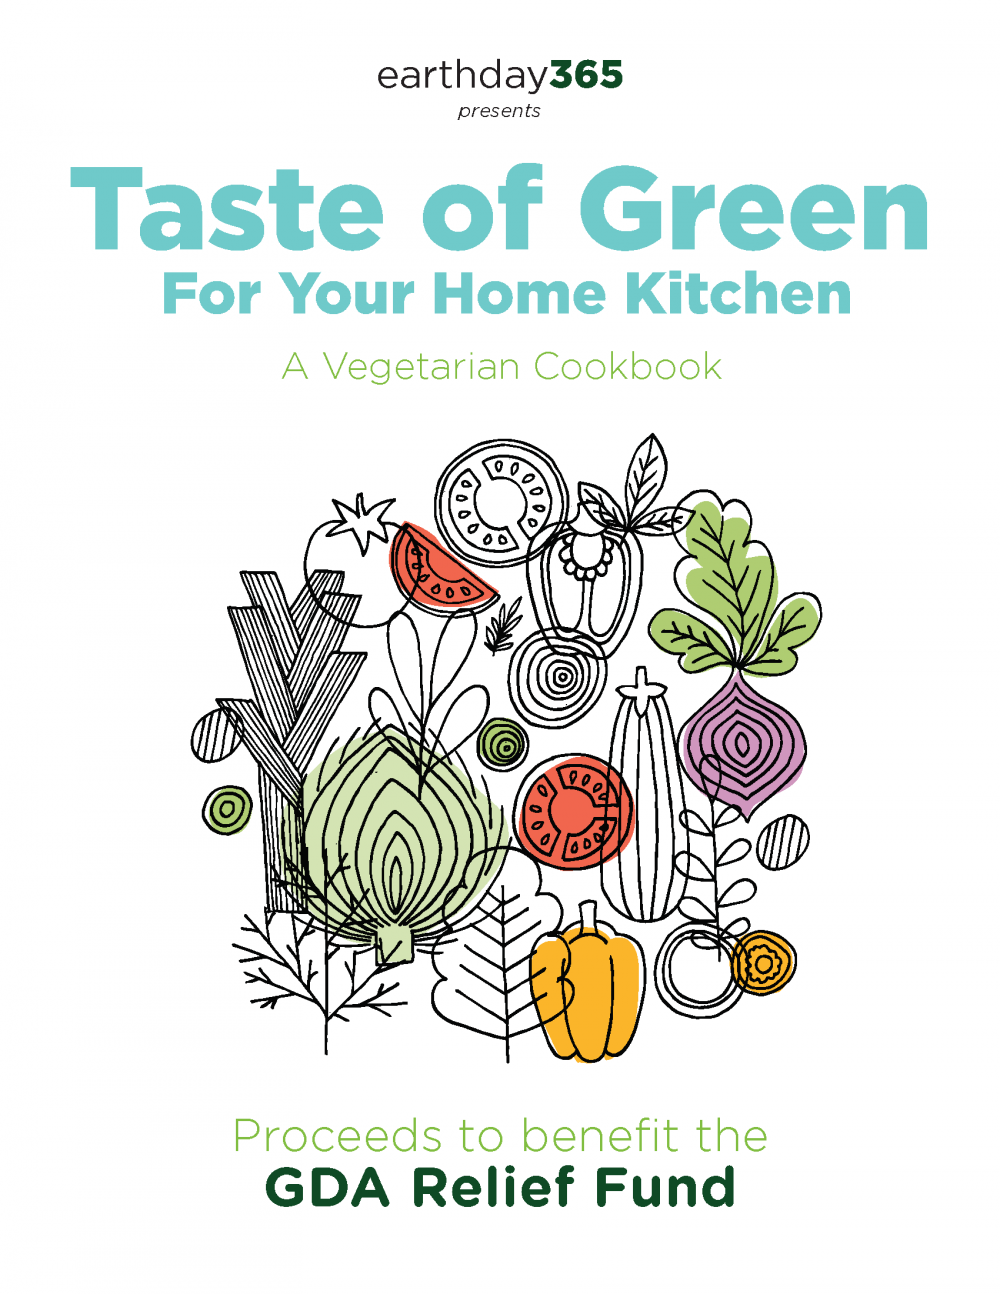 Taste of Green cookbook cover